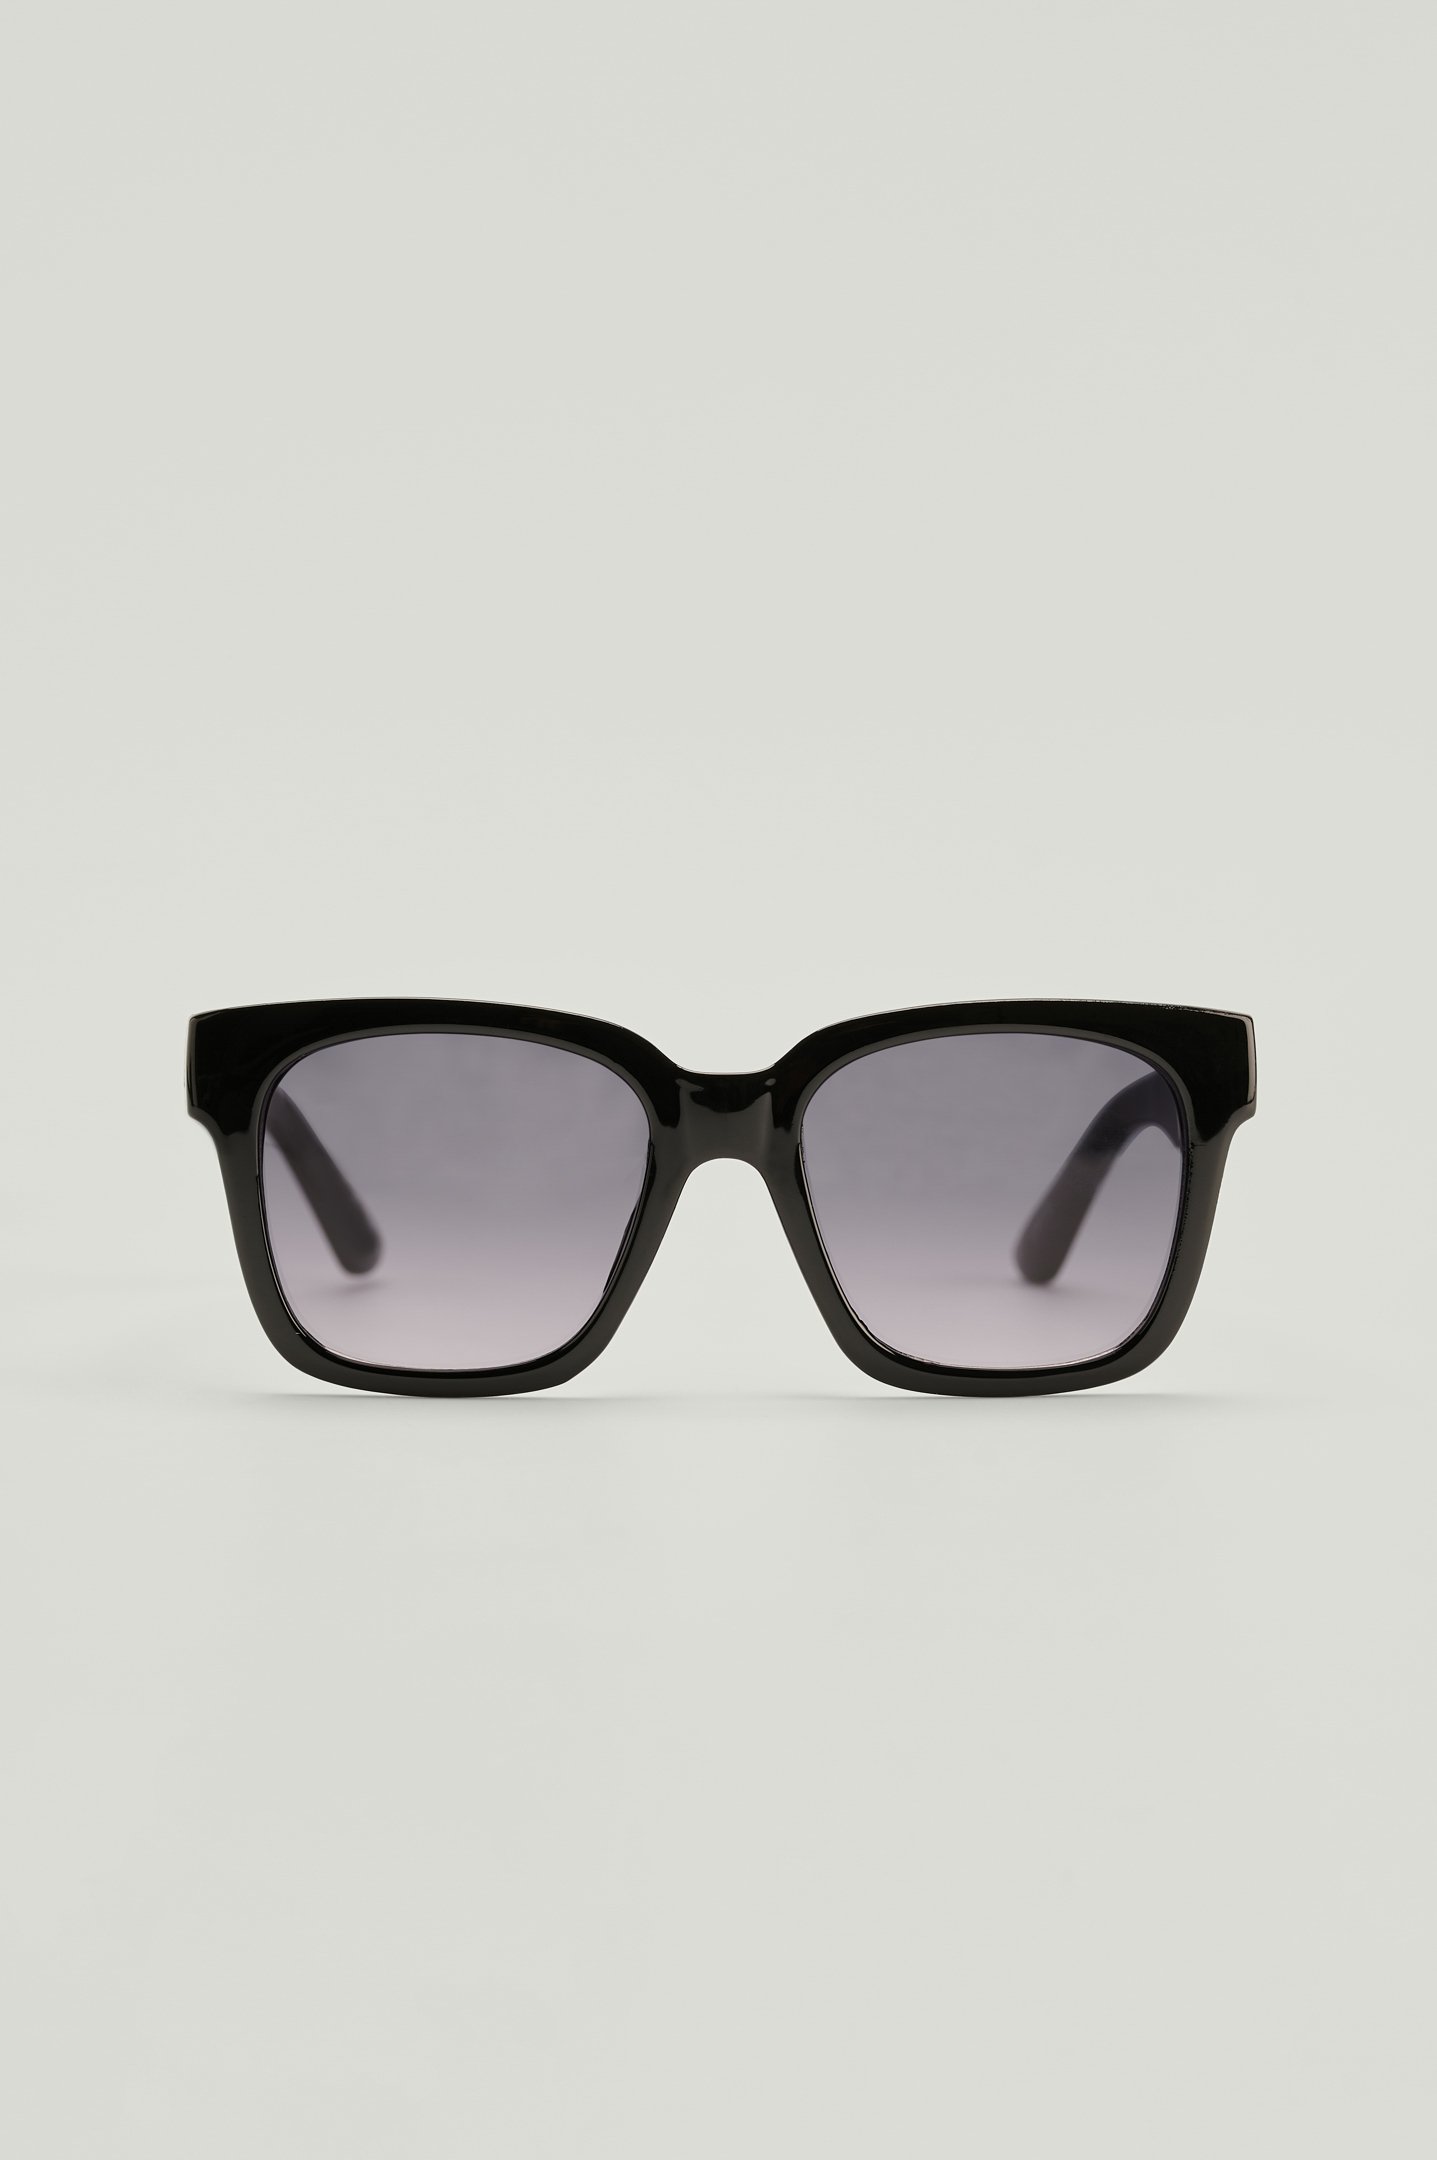 Black Große runde recycelte Sonnenbrille